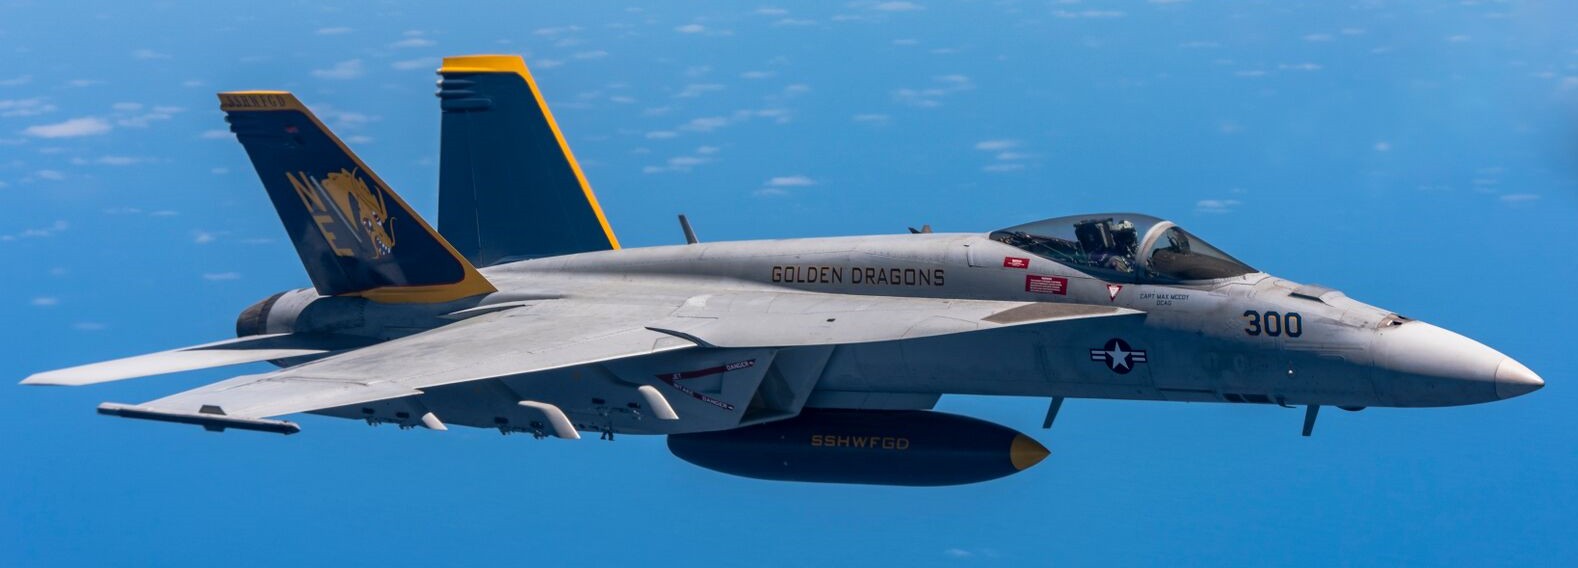 vfa-192 golden dragons strike fighter squadron navy f/a-18e super hornet carrier air wing cvw-2 uss george washington cvn-73 90